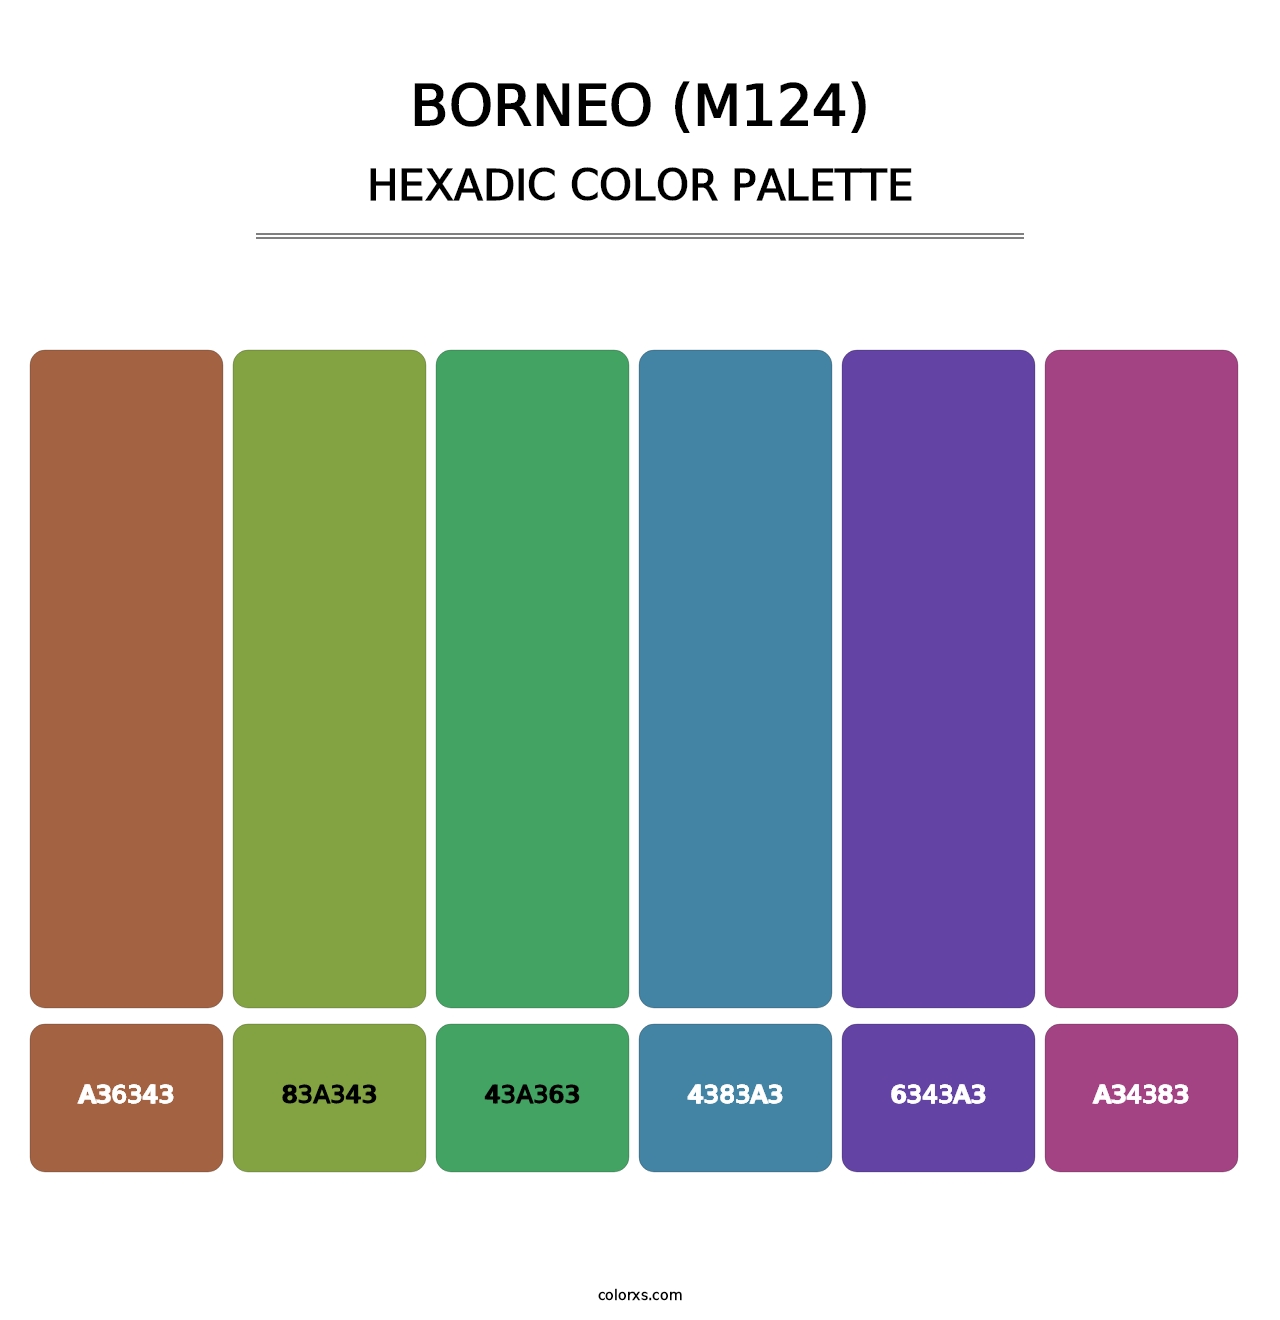 Borneo (M124) - Hexadic Color Palette